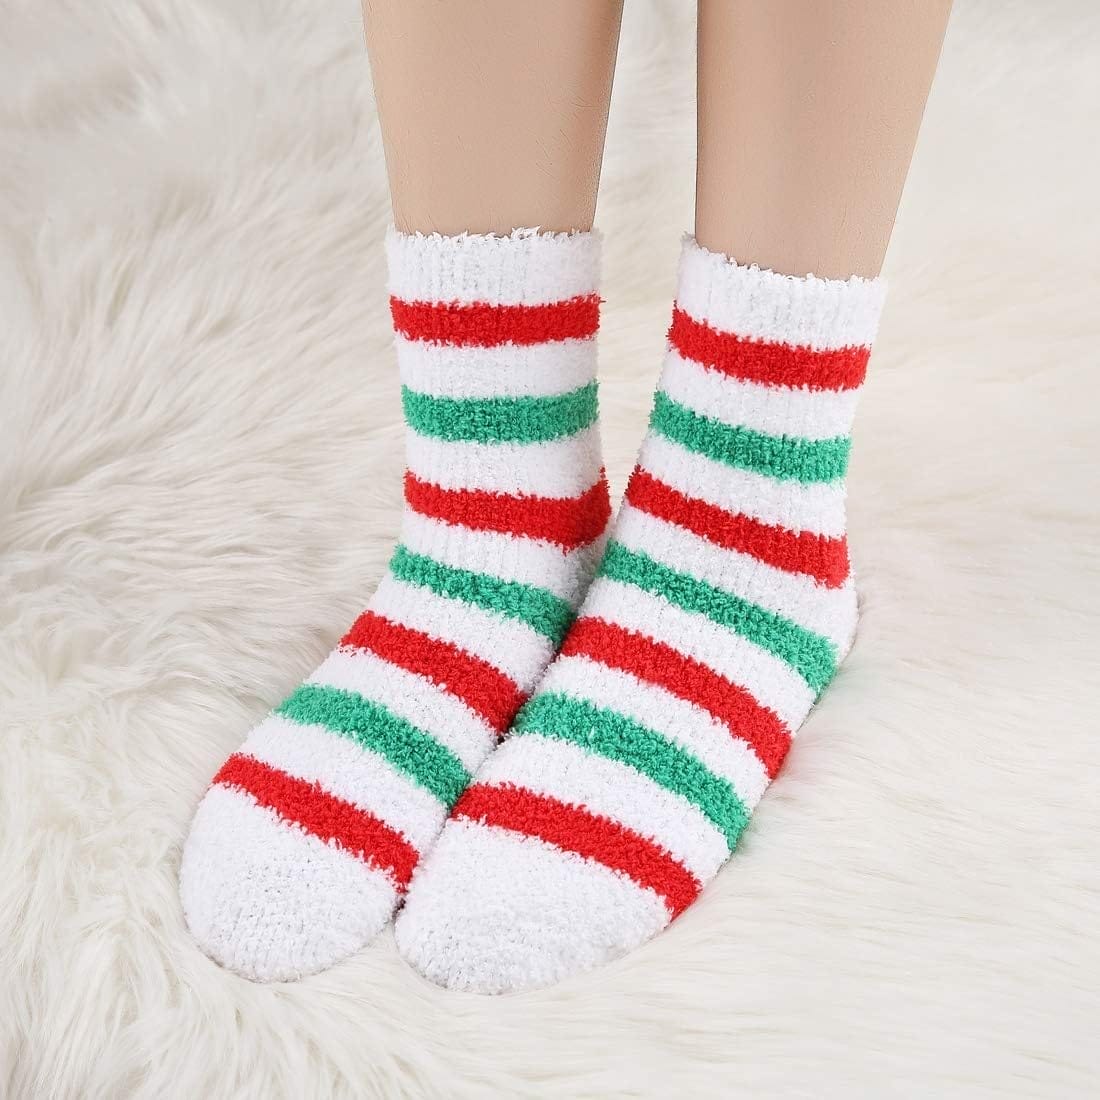 Aivanart Fuzzy Socks for Women,6 Pairs Soft Fluffy Cozy Slipper Socks,Comfy Warm Winter Sleep Plush Bed Socks for Valentines Day Gifts